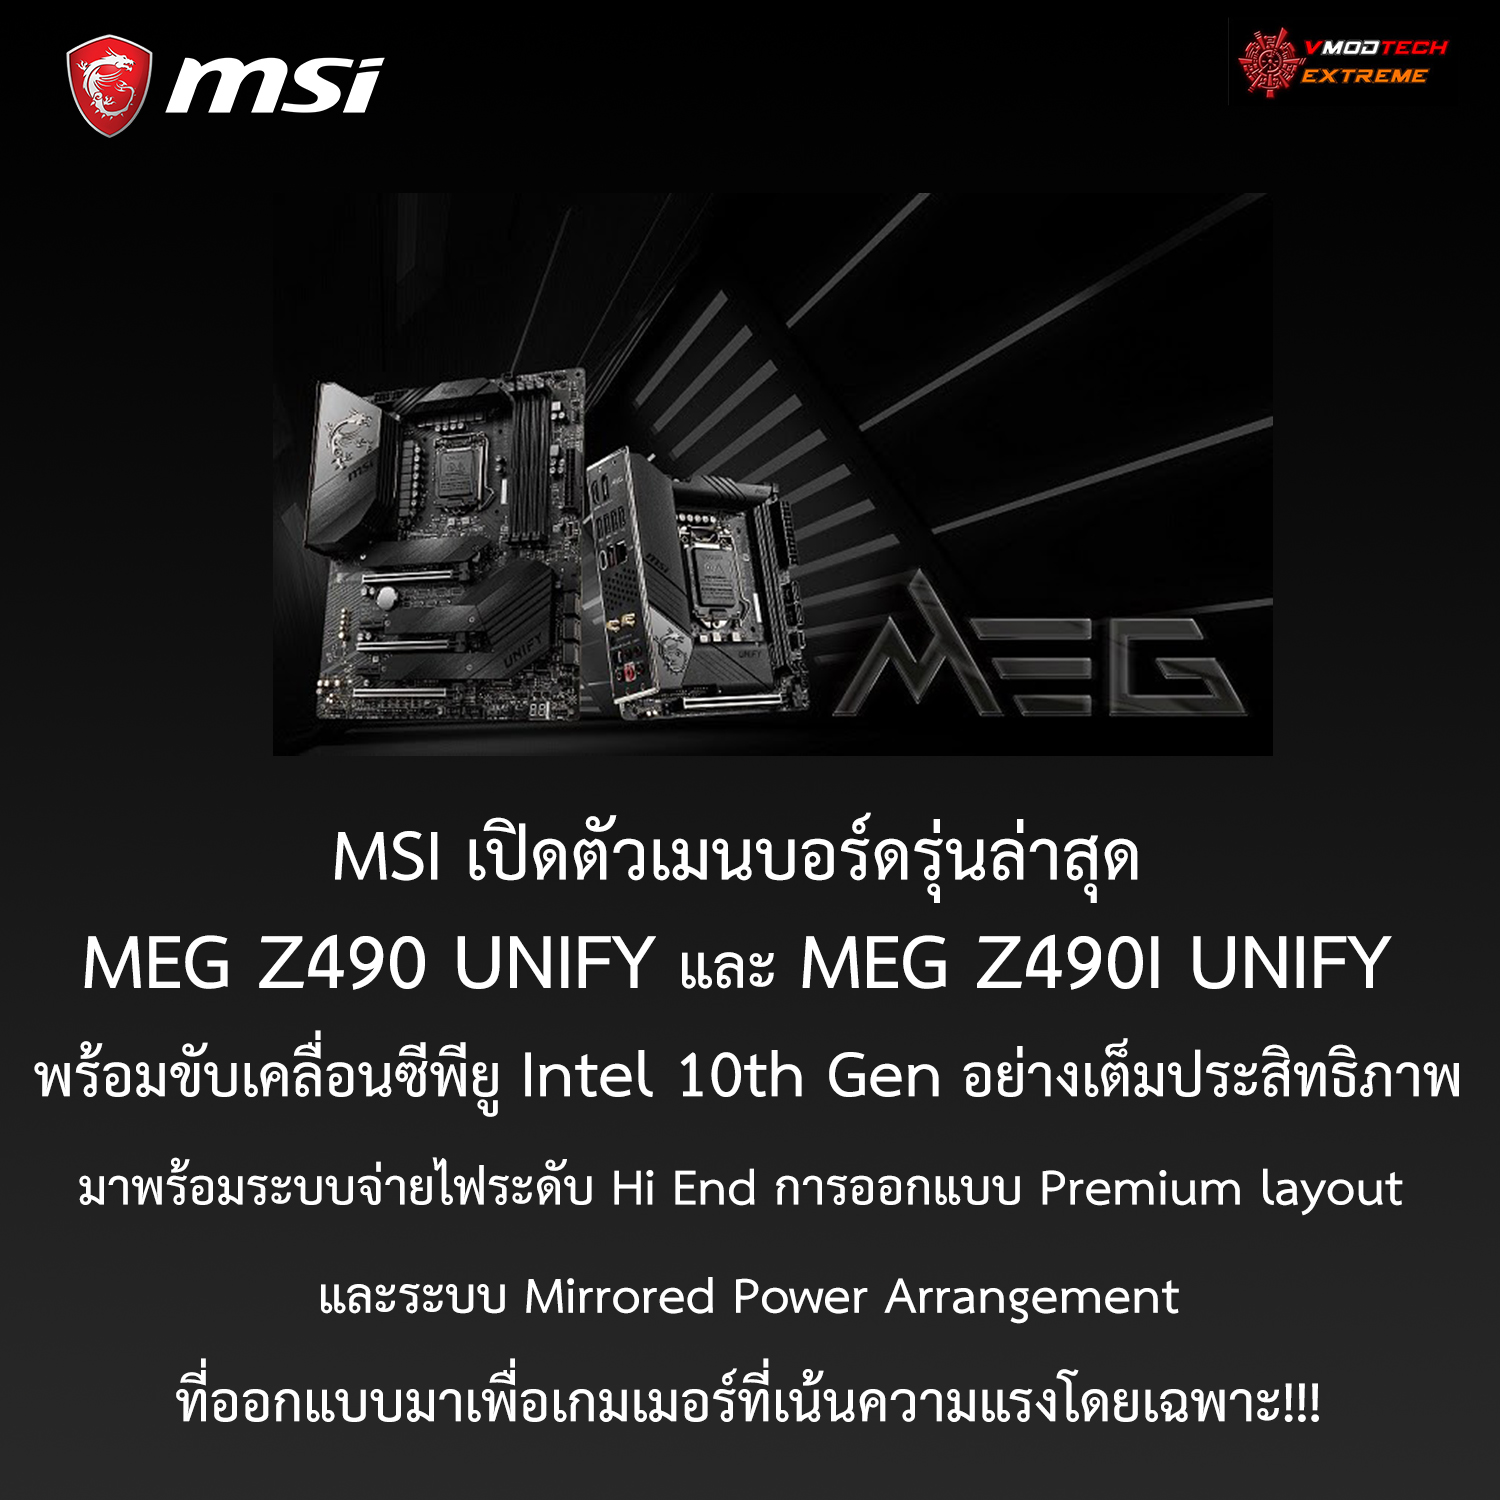 msi 400 series unify motherboards สัมผัสพลังบริสุทธิ์แห่งสีดำสนิท: MSI 400 SERIES UNIFY MOTHERBOARDS